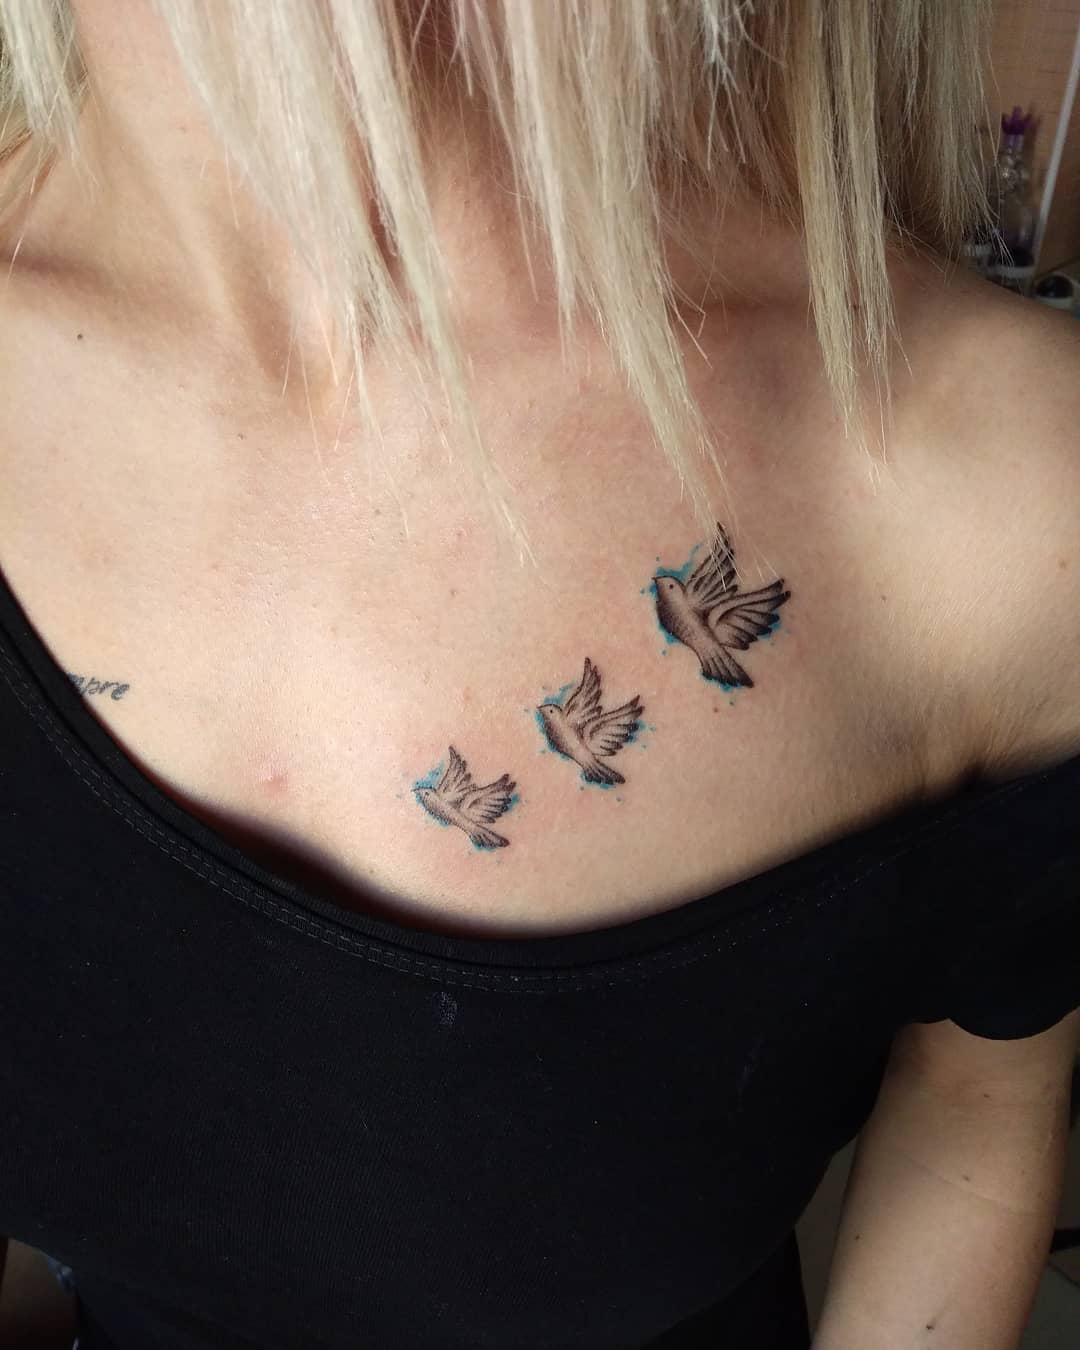 Skull tattoo design with dove 💉💉💉💉 - Mohawk Tattoo Studio | Facebook